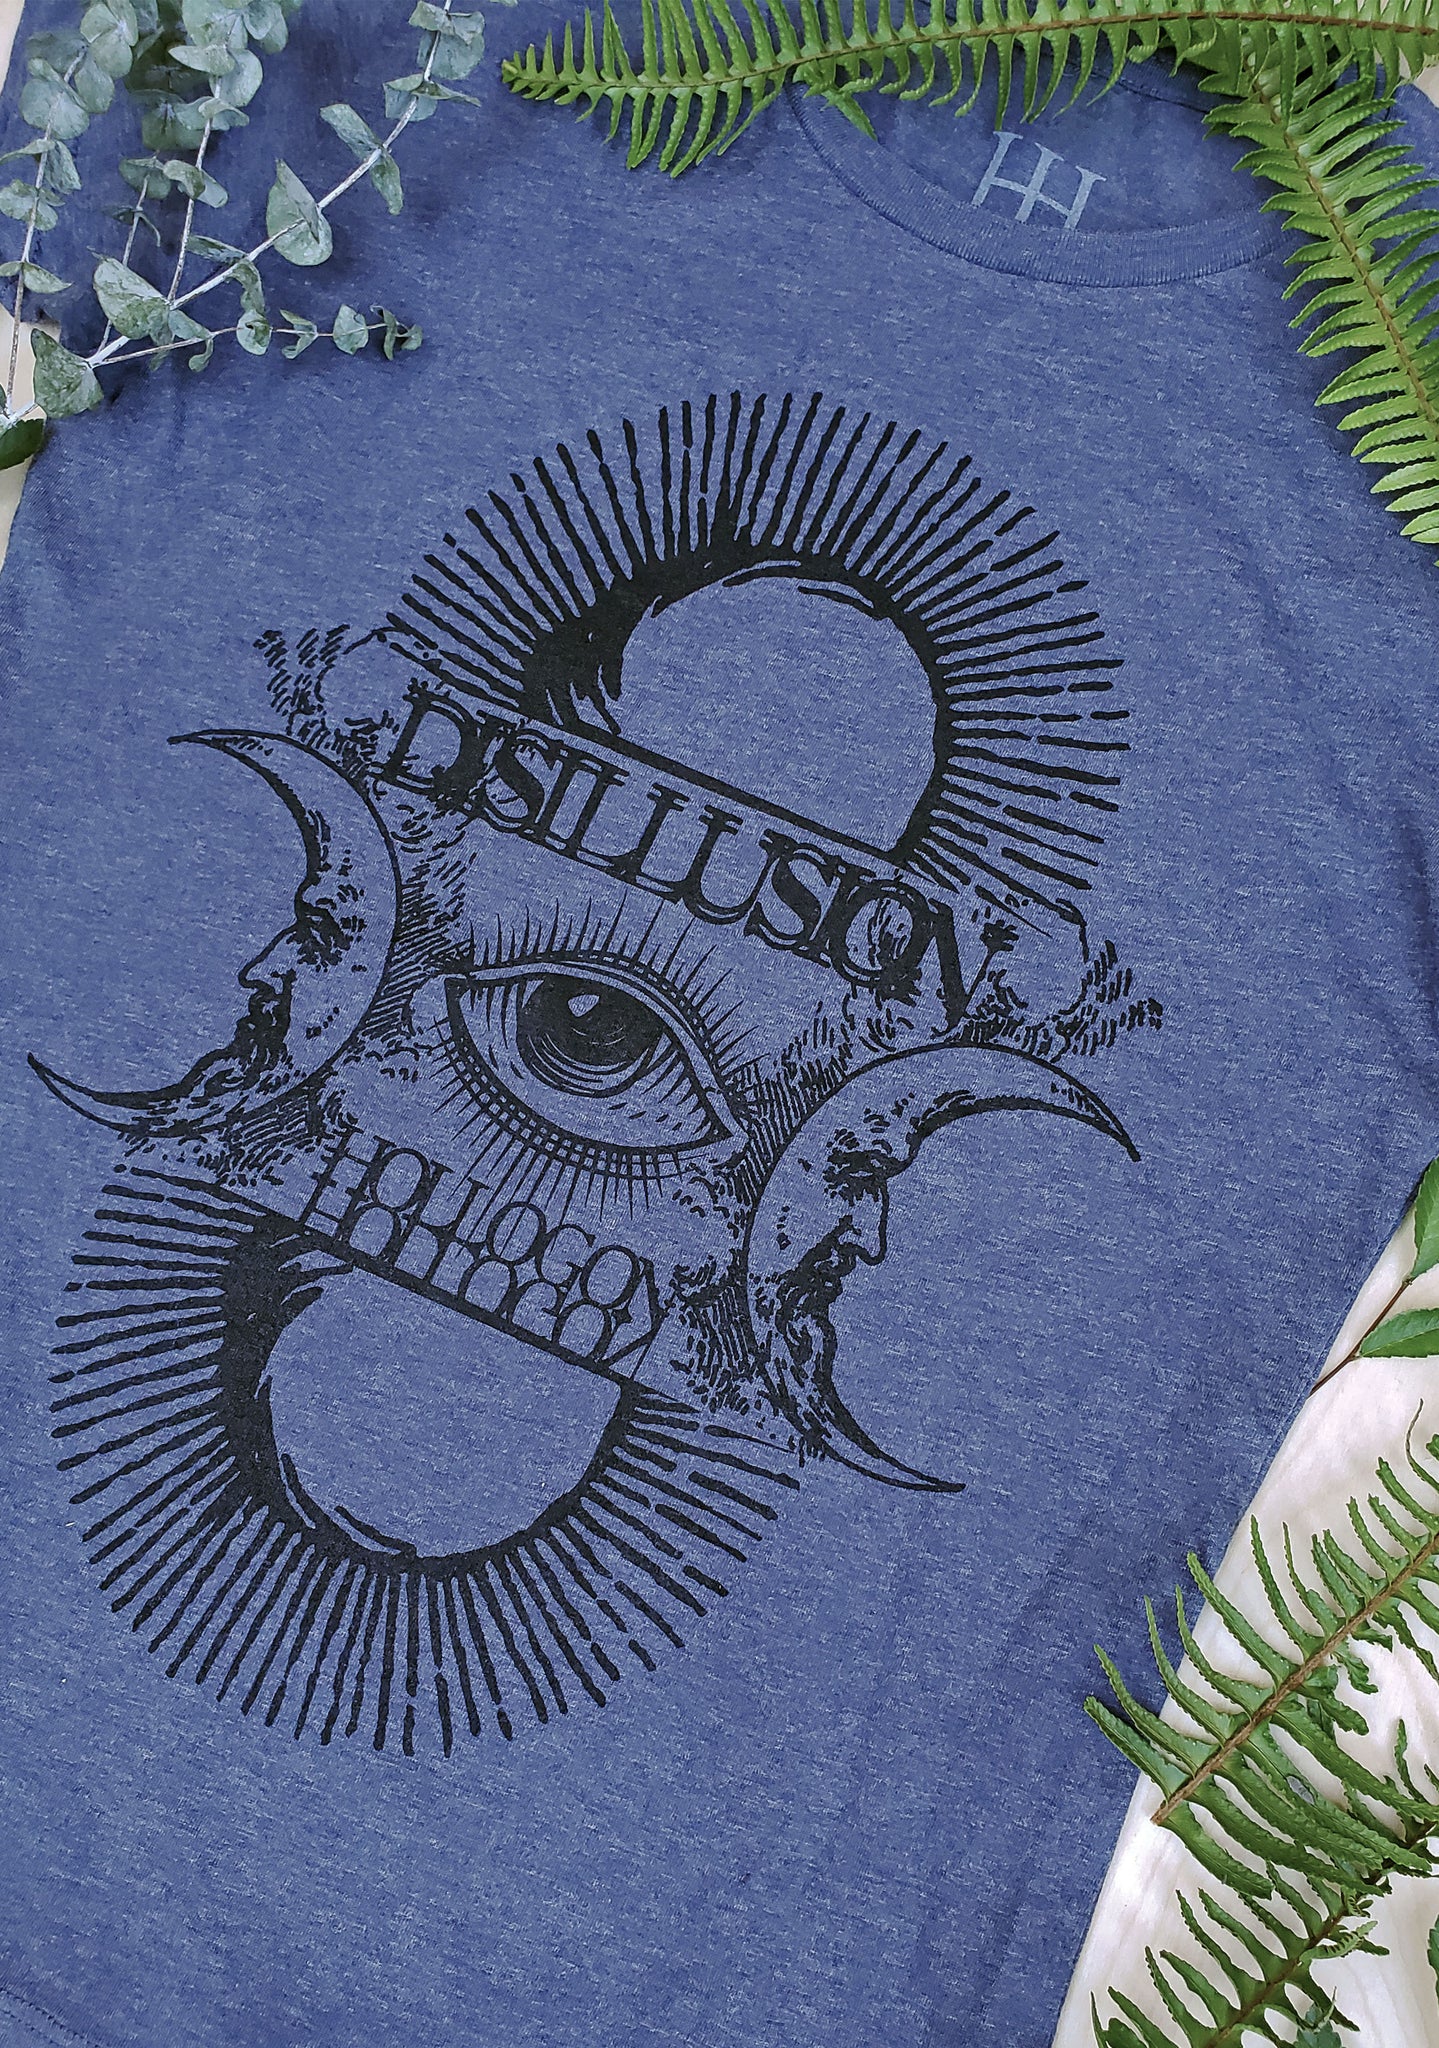 Disillusion Grey-Blue Women's T Shirt